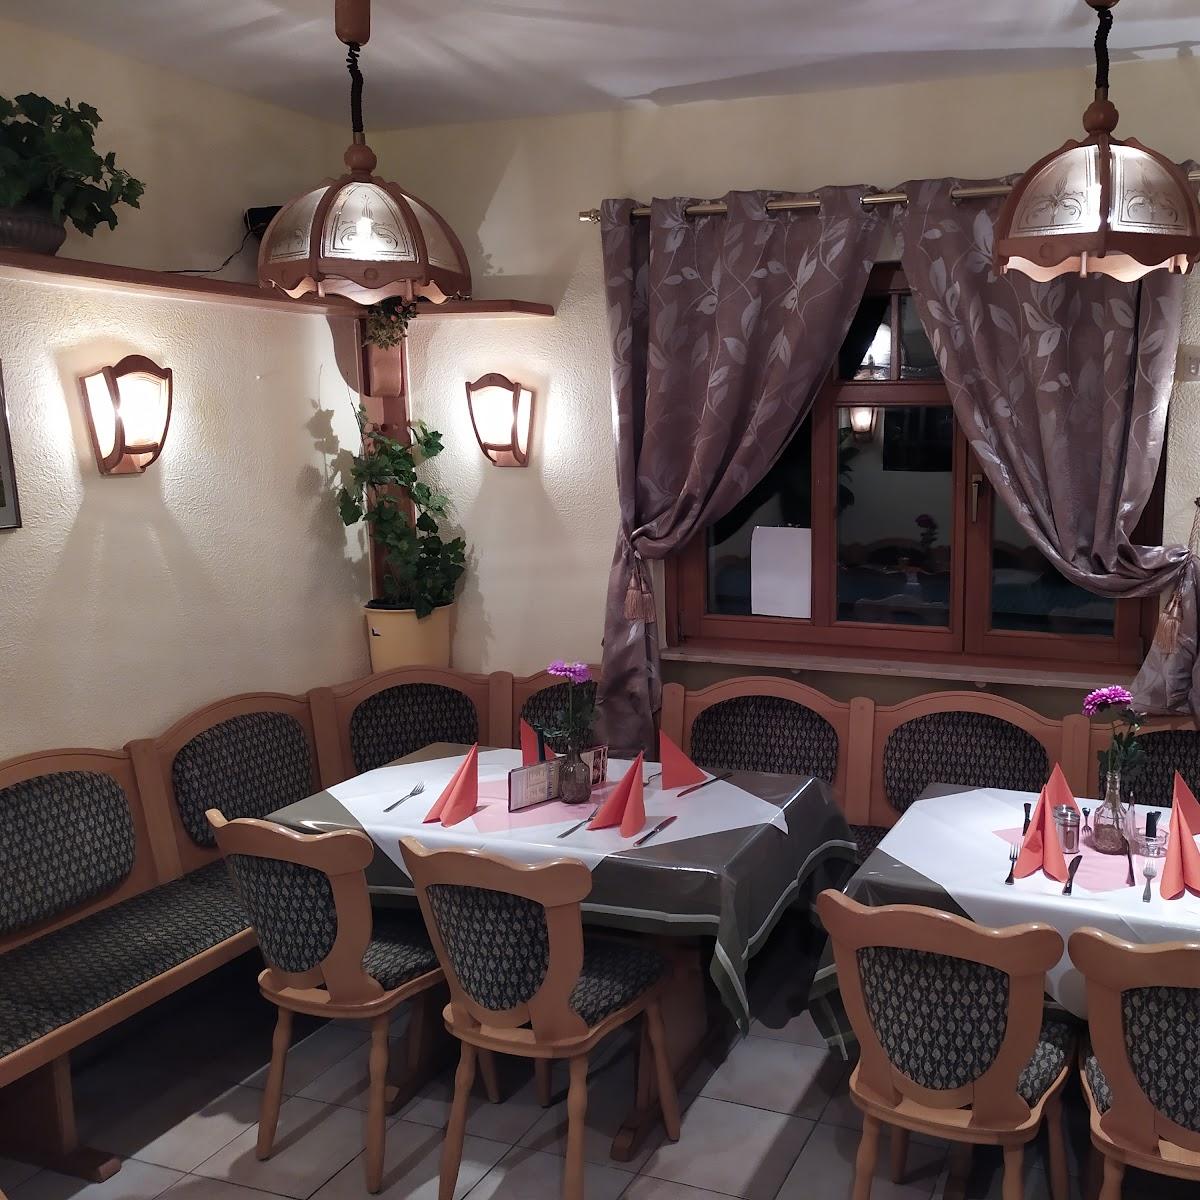 Restaurant "City Haus" in Zella-Mehlis